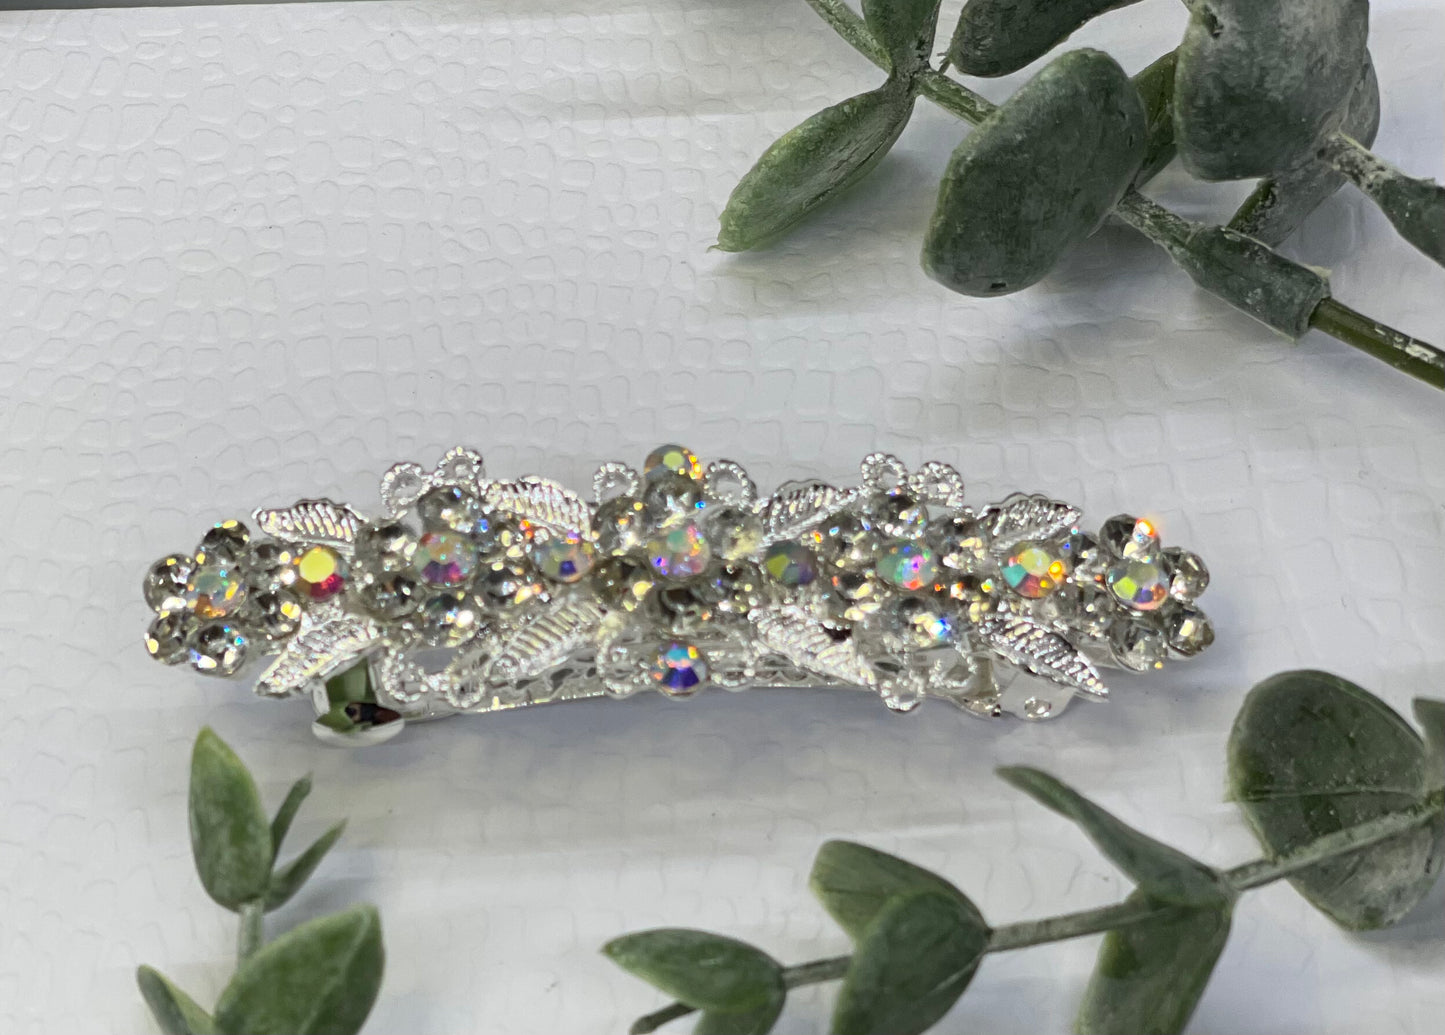 iridecent Crystal rhinestone barrette approximately 3.0” silver tone formal hair accessories gift wedding bridesmaid